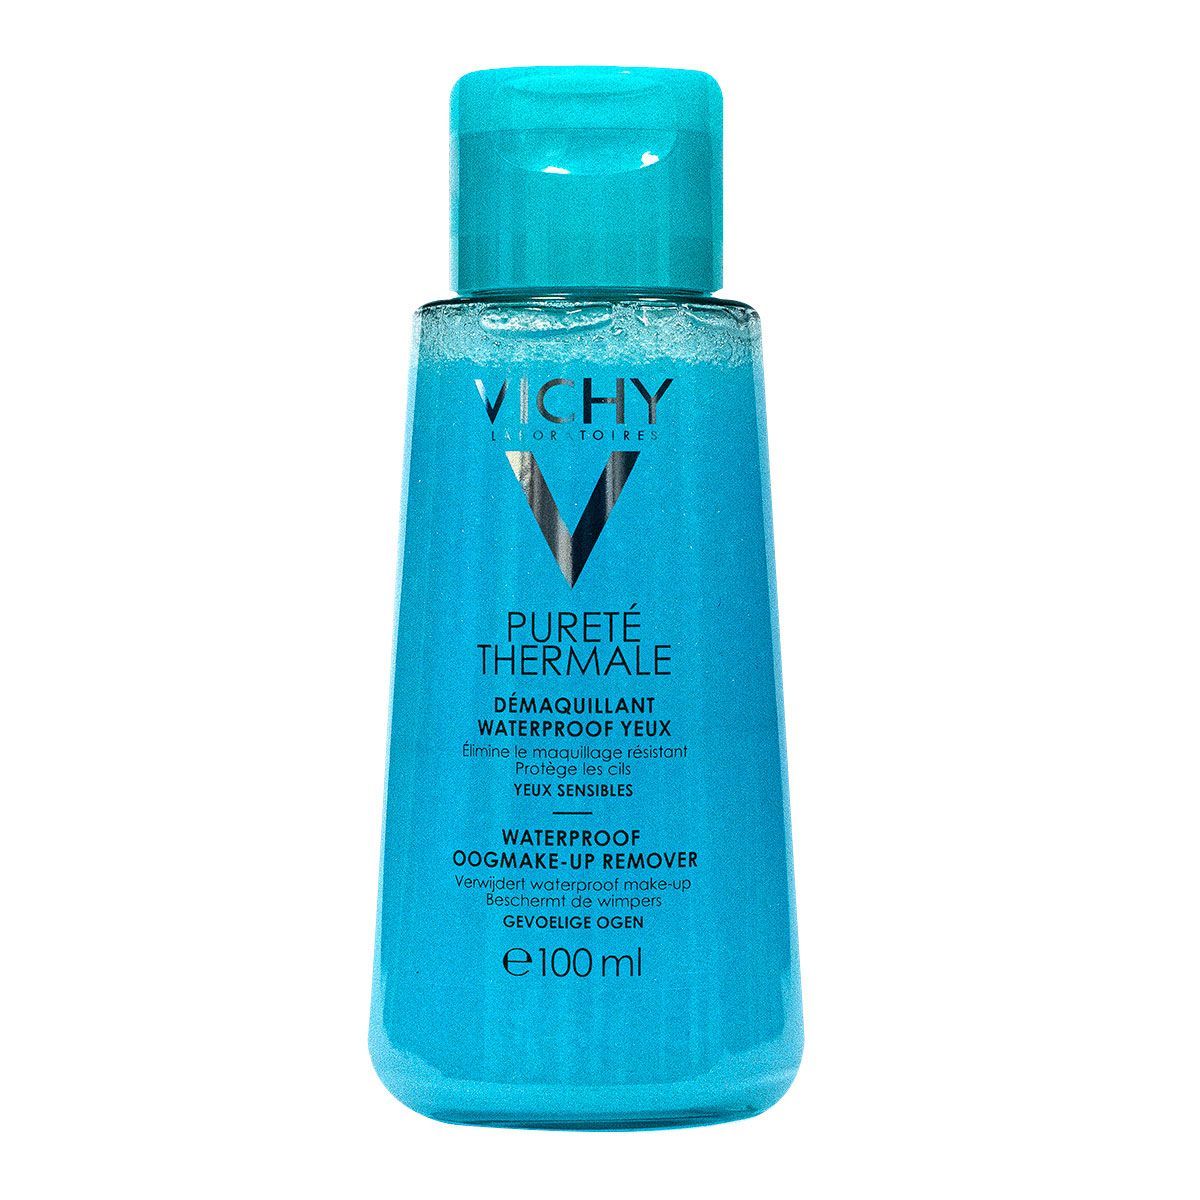 Vichy Laboratoires PURETE THERMALE dEmaquillant yeux sensibles waterproof  Make-up remover